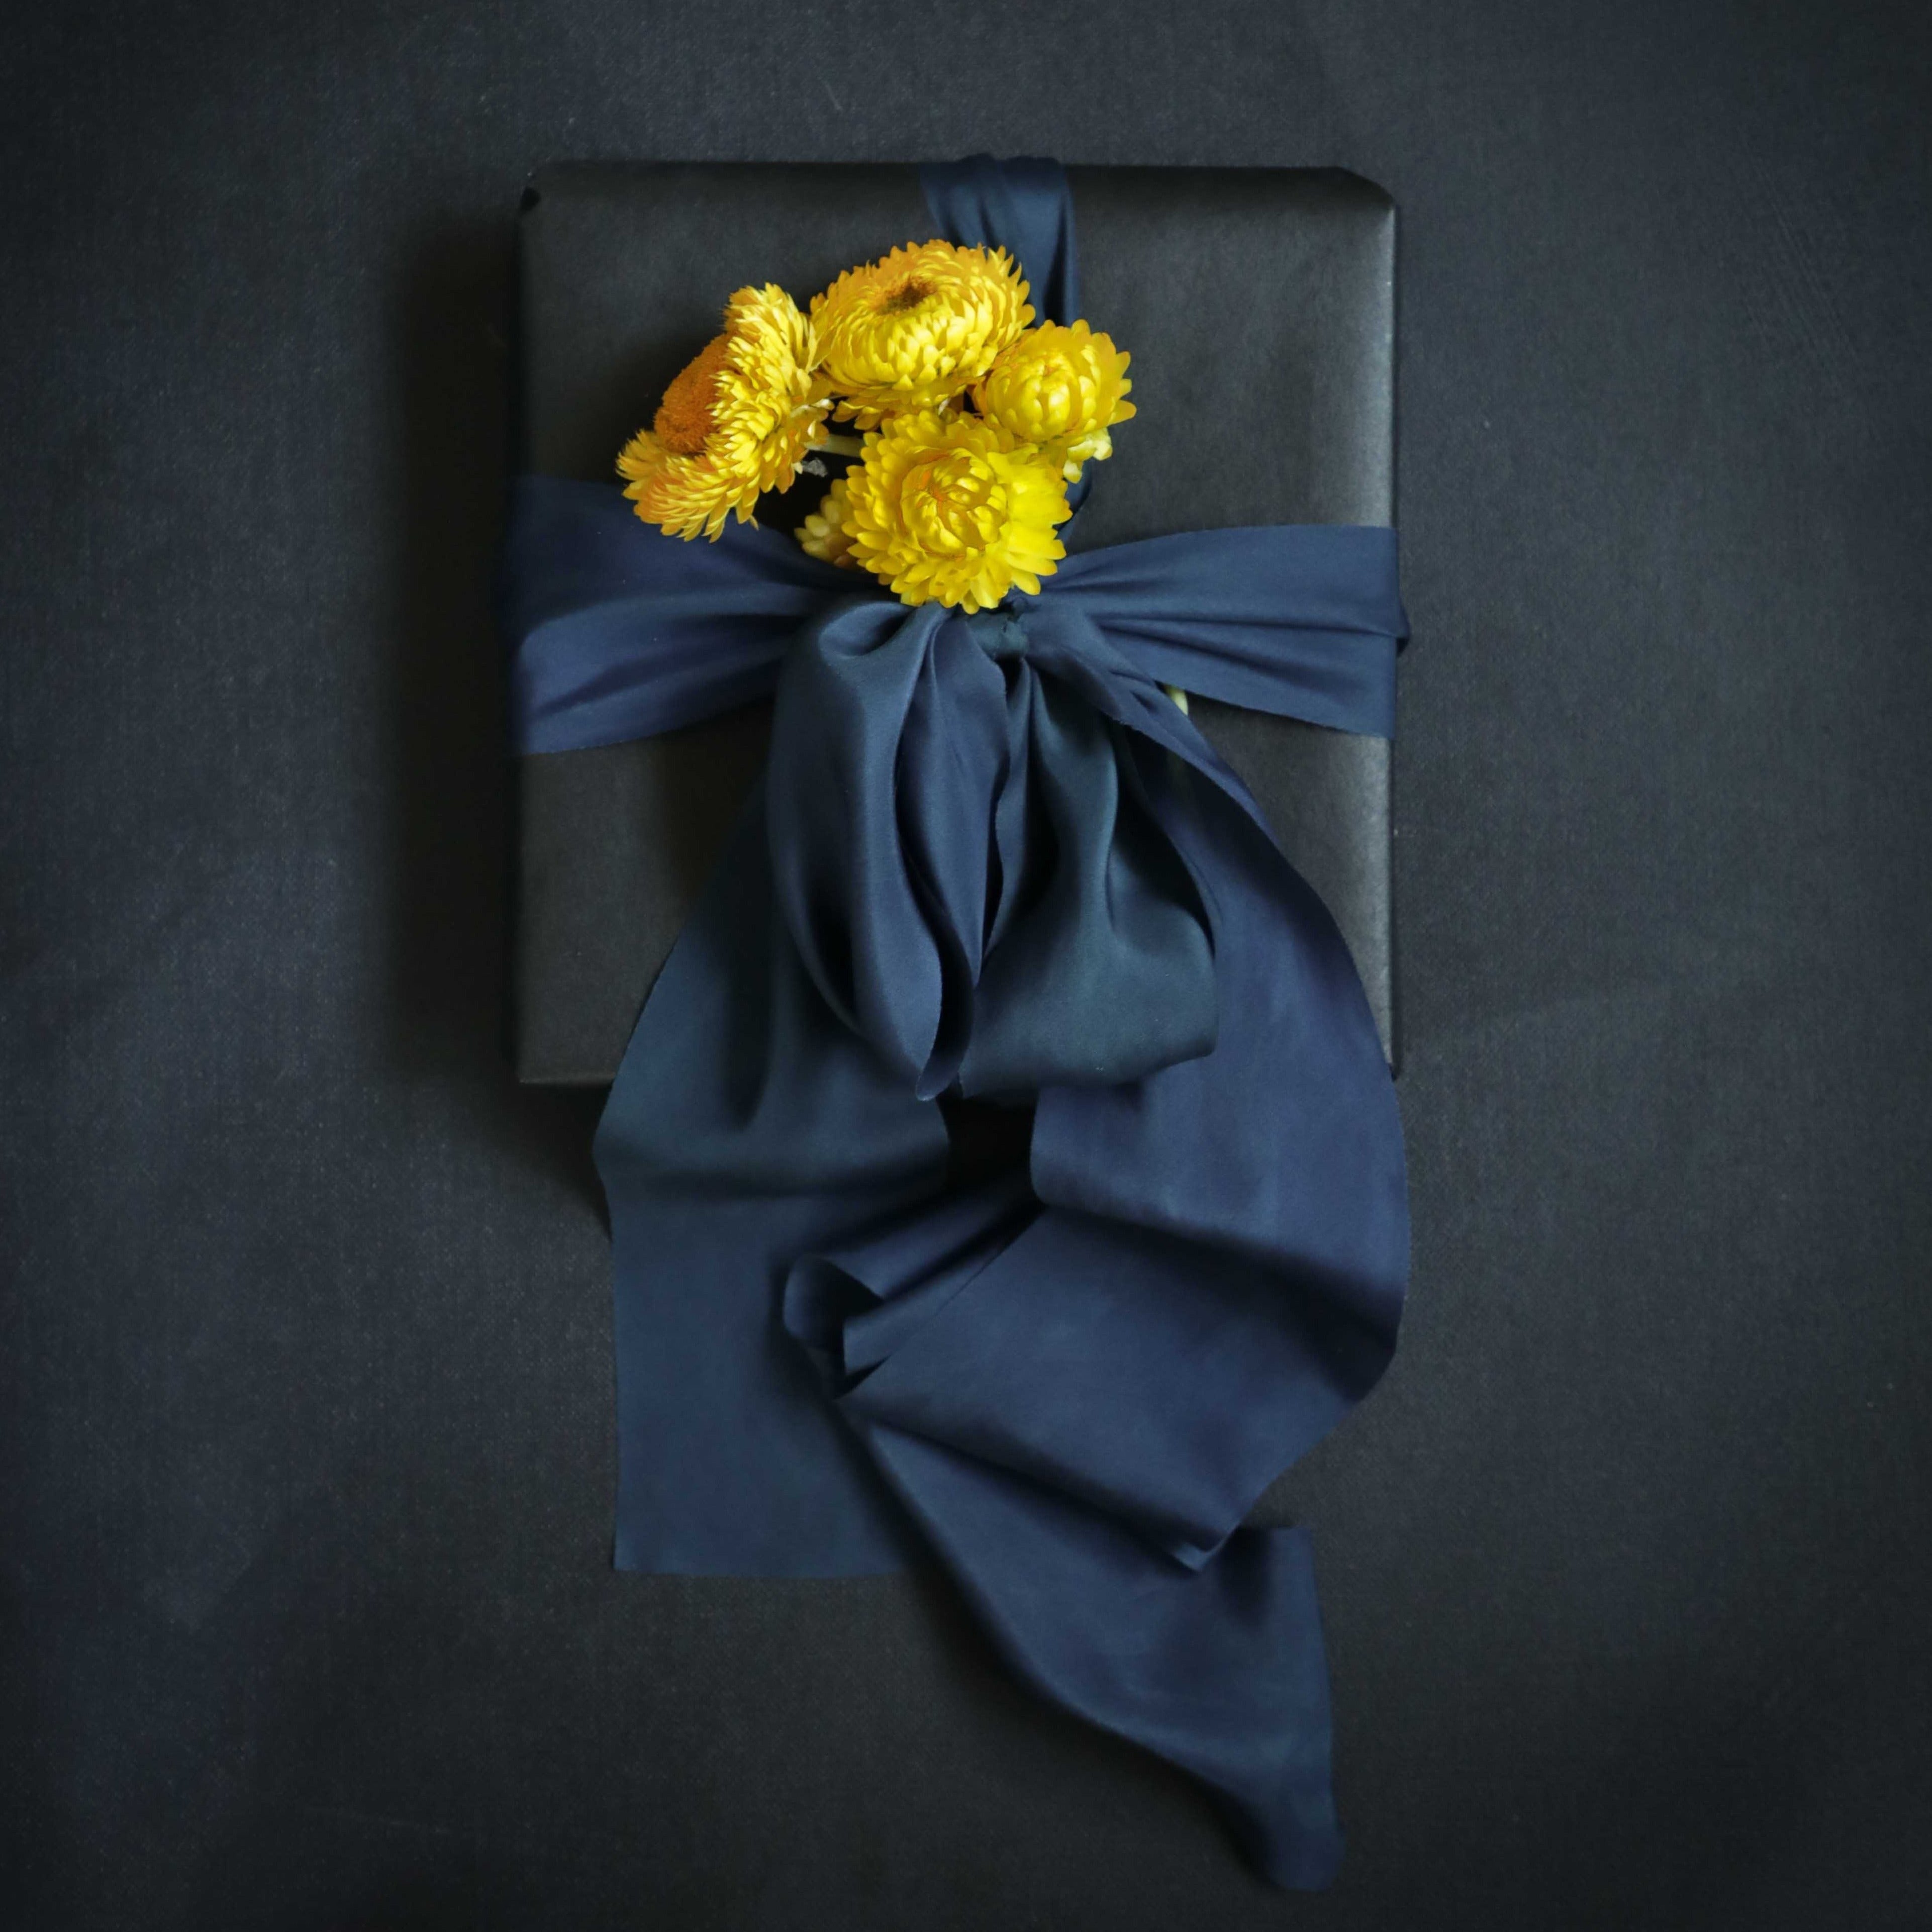 Turkish Delite Silky Ribbon Yarn - Oh Baby Blue